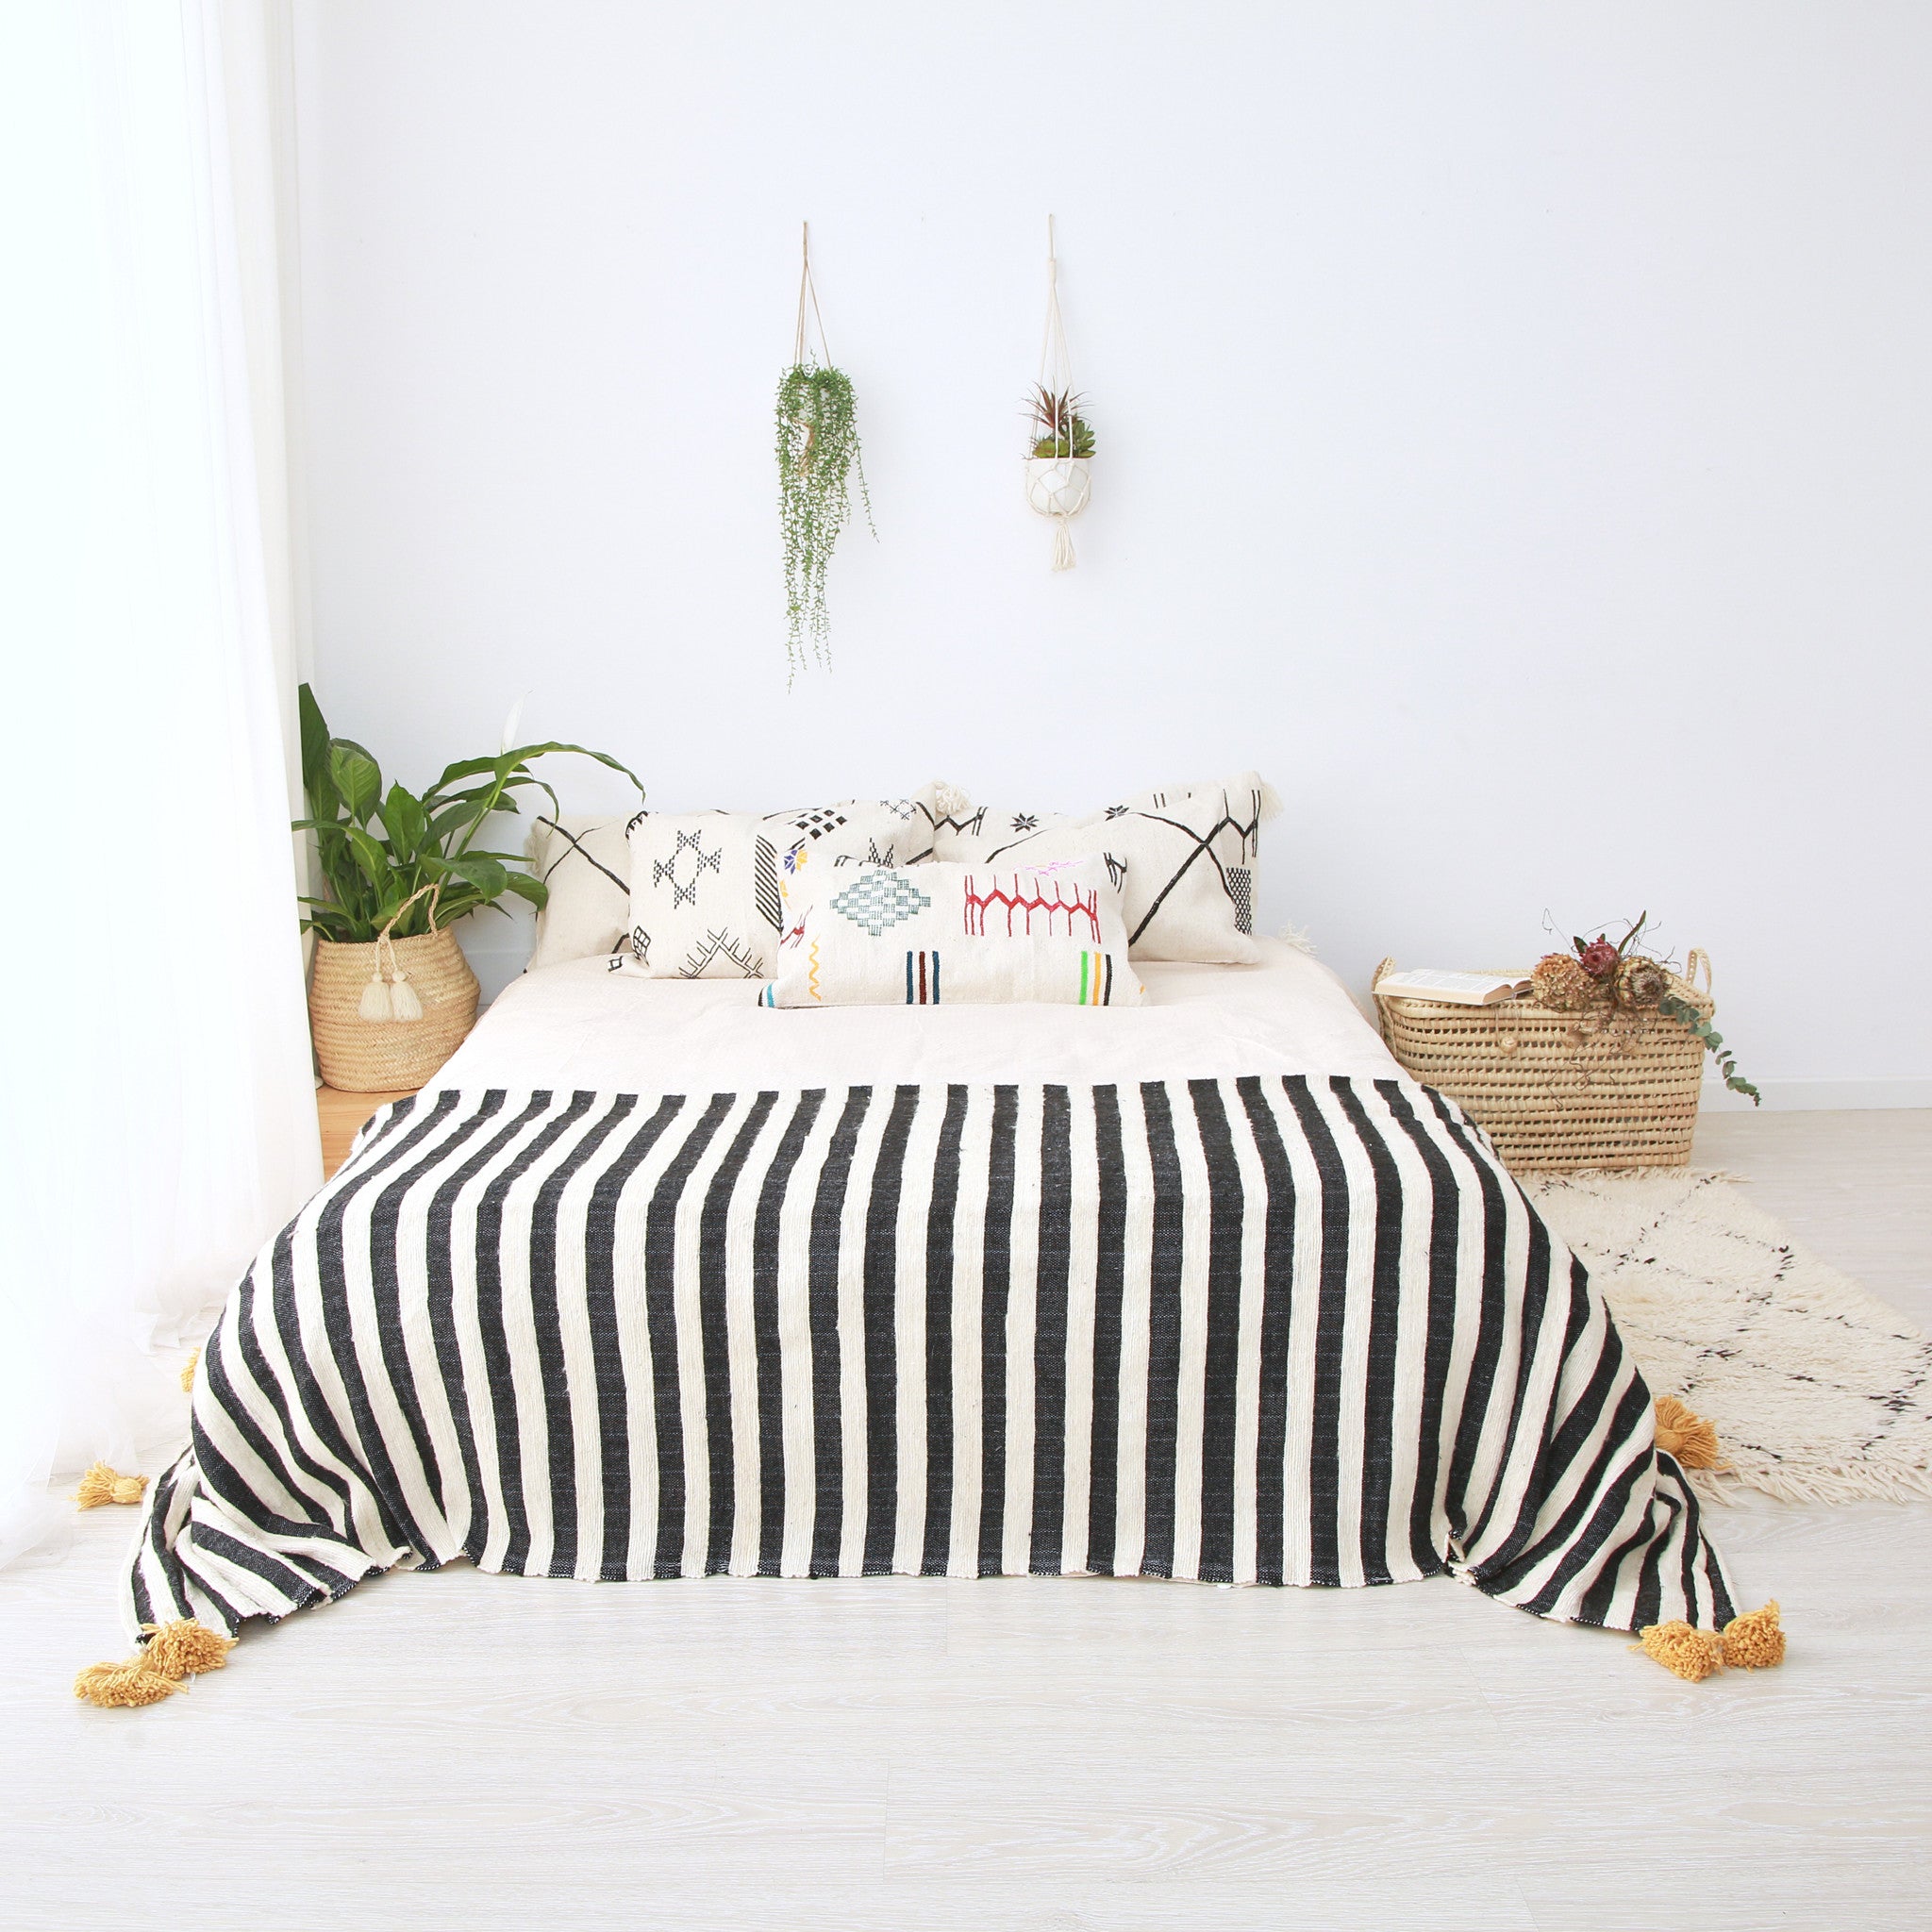 Black and white striped furnishing blanket